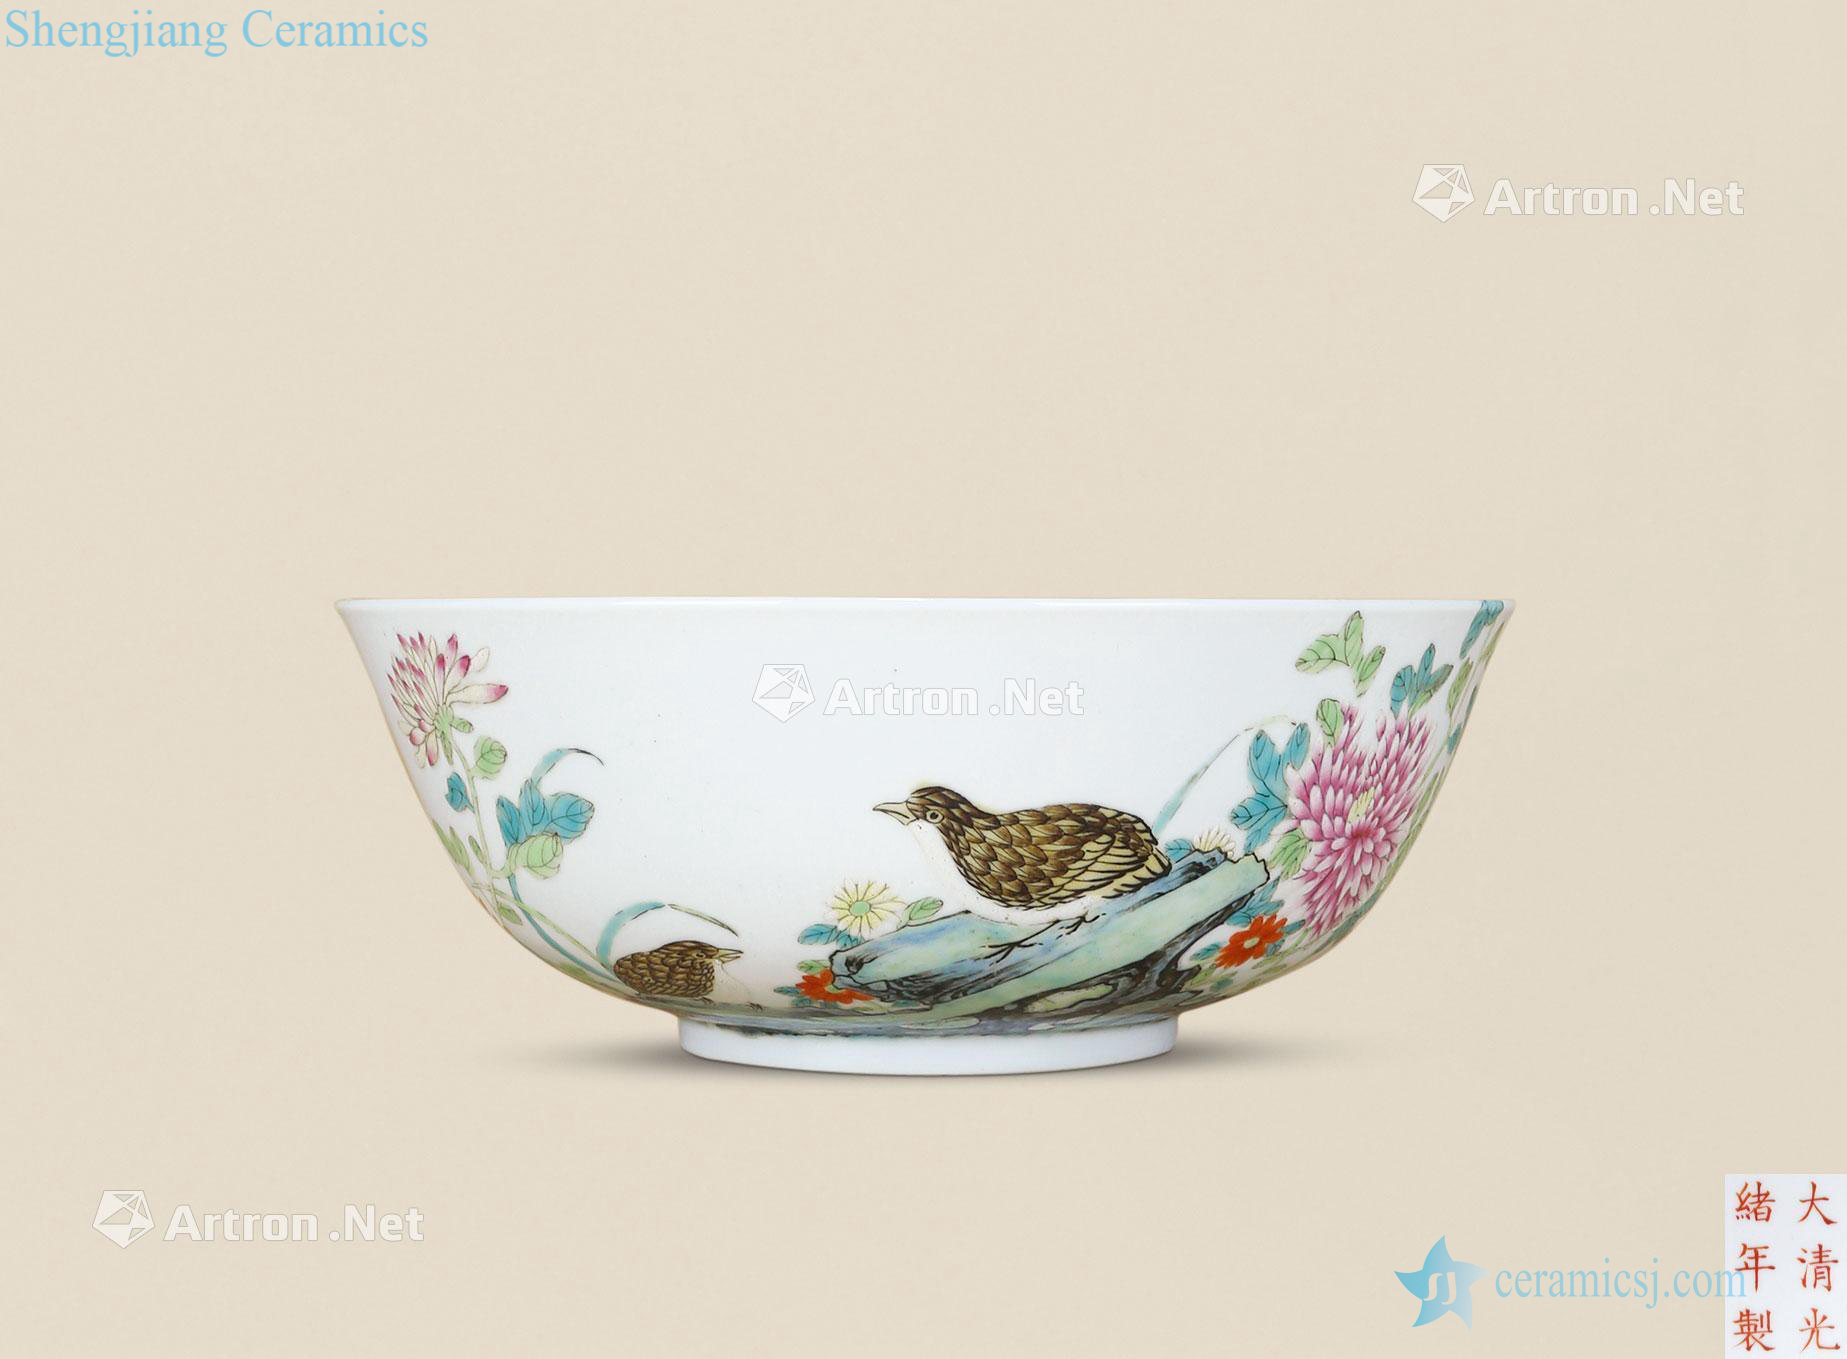 Pastel reign of qing emperor guangxu "live" grain big bowl